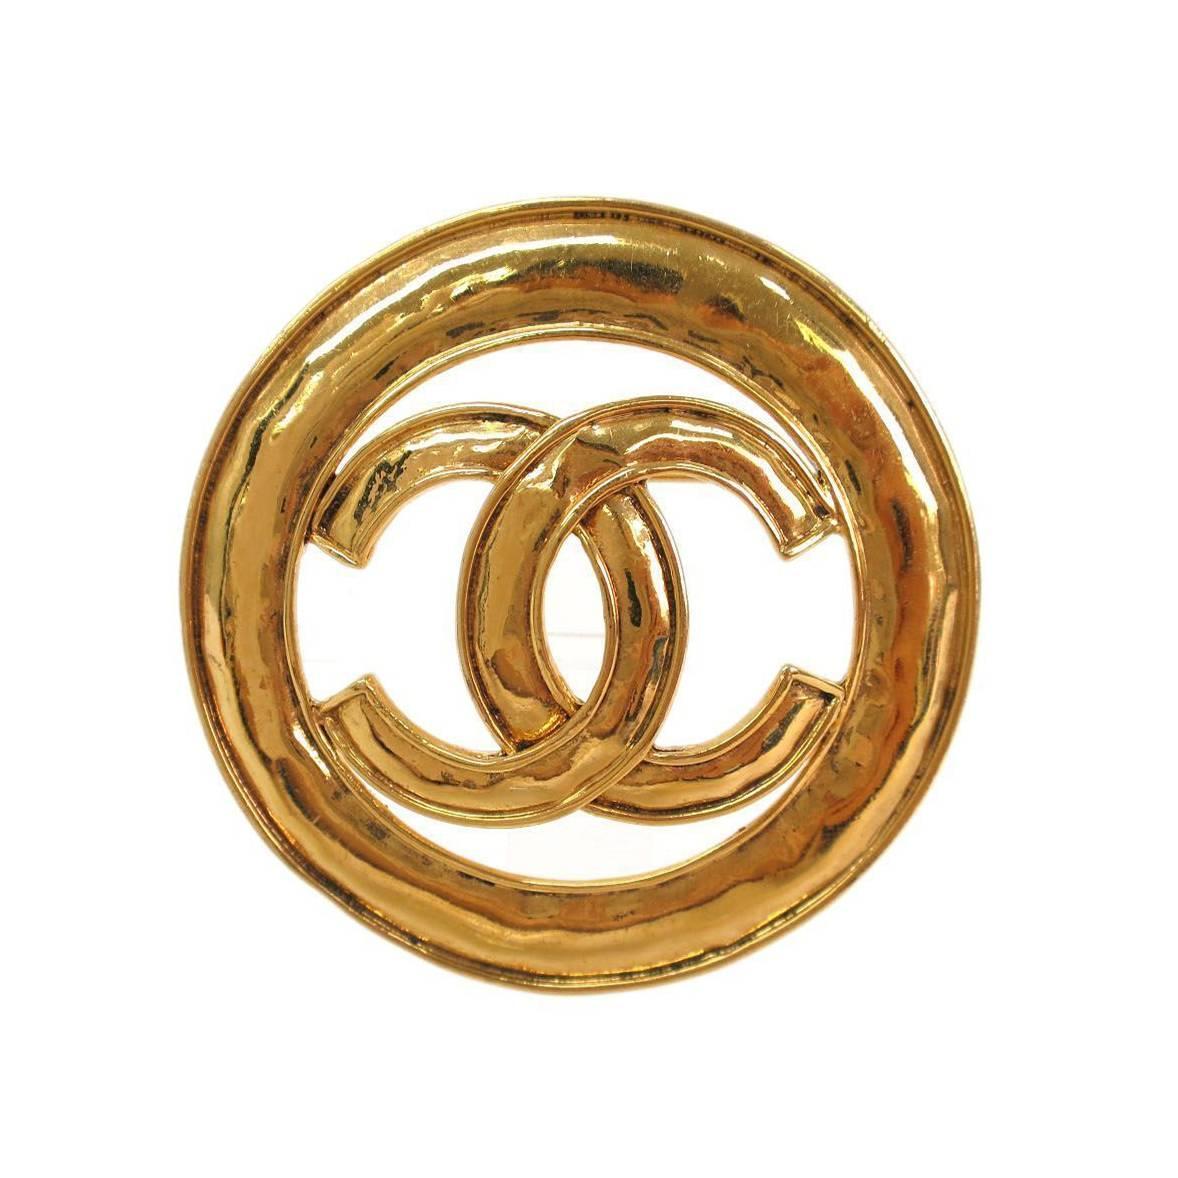 Chanel Vintage Gold Tone Metal CC Pin Brooch at 1stdibs